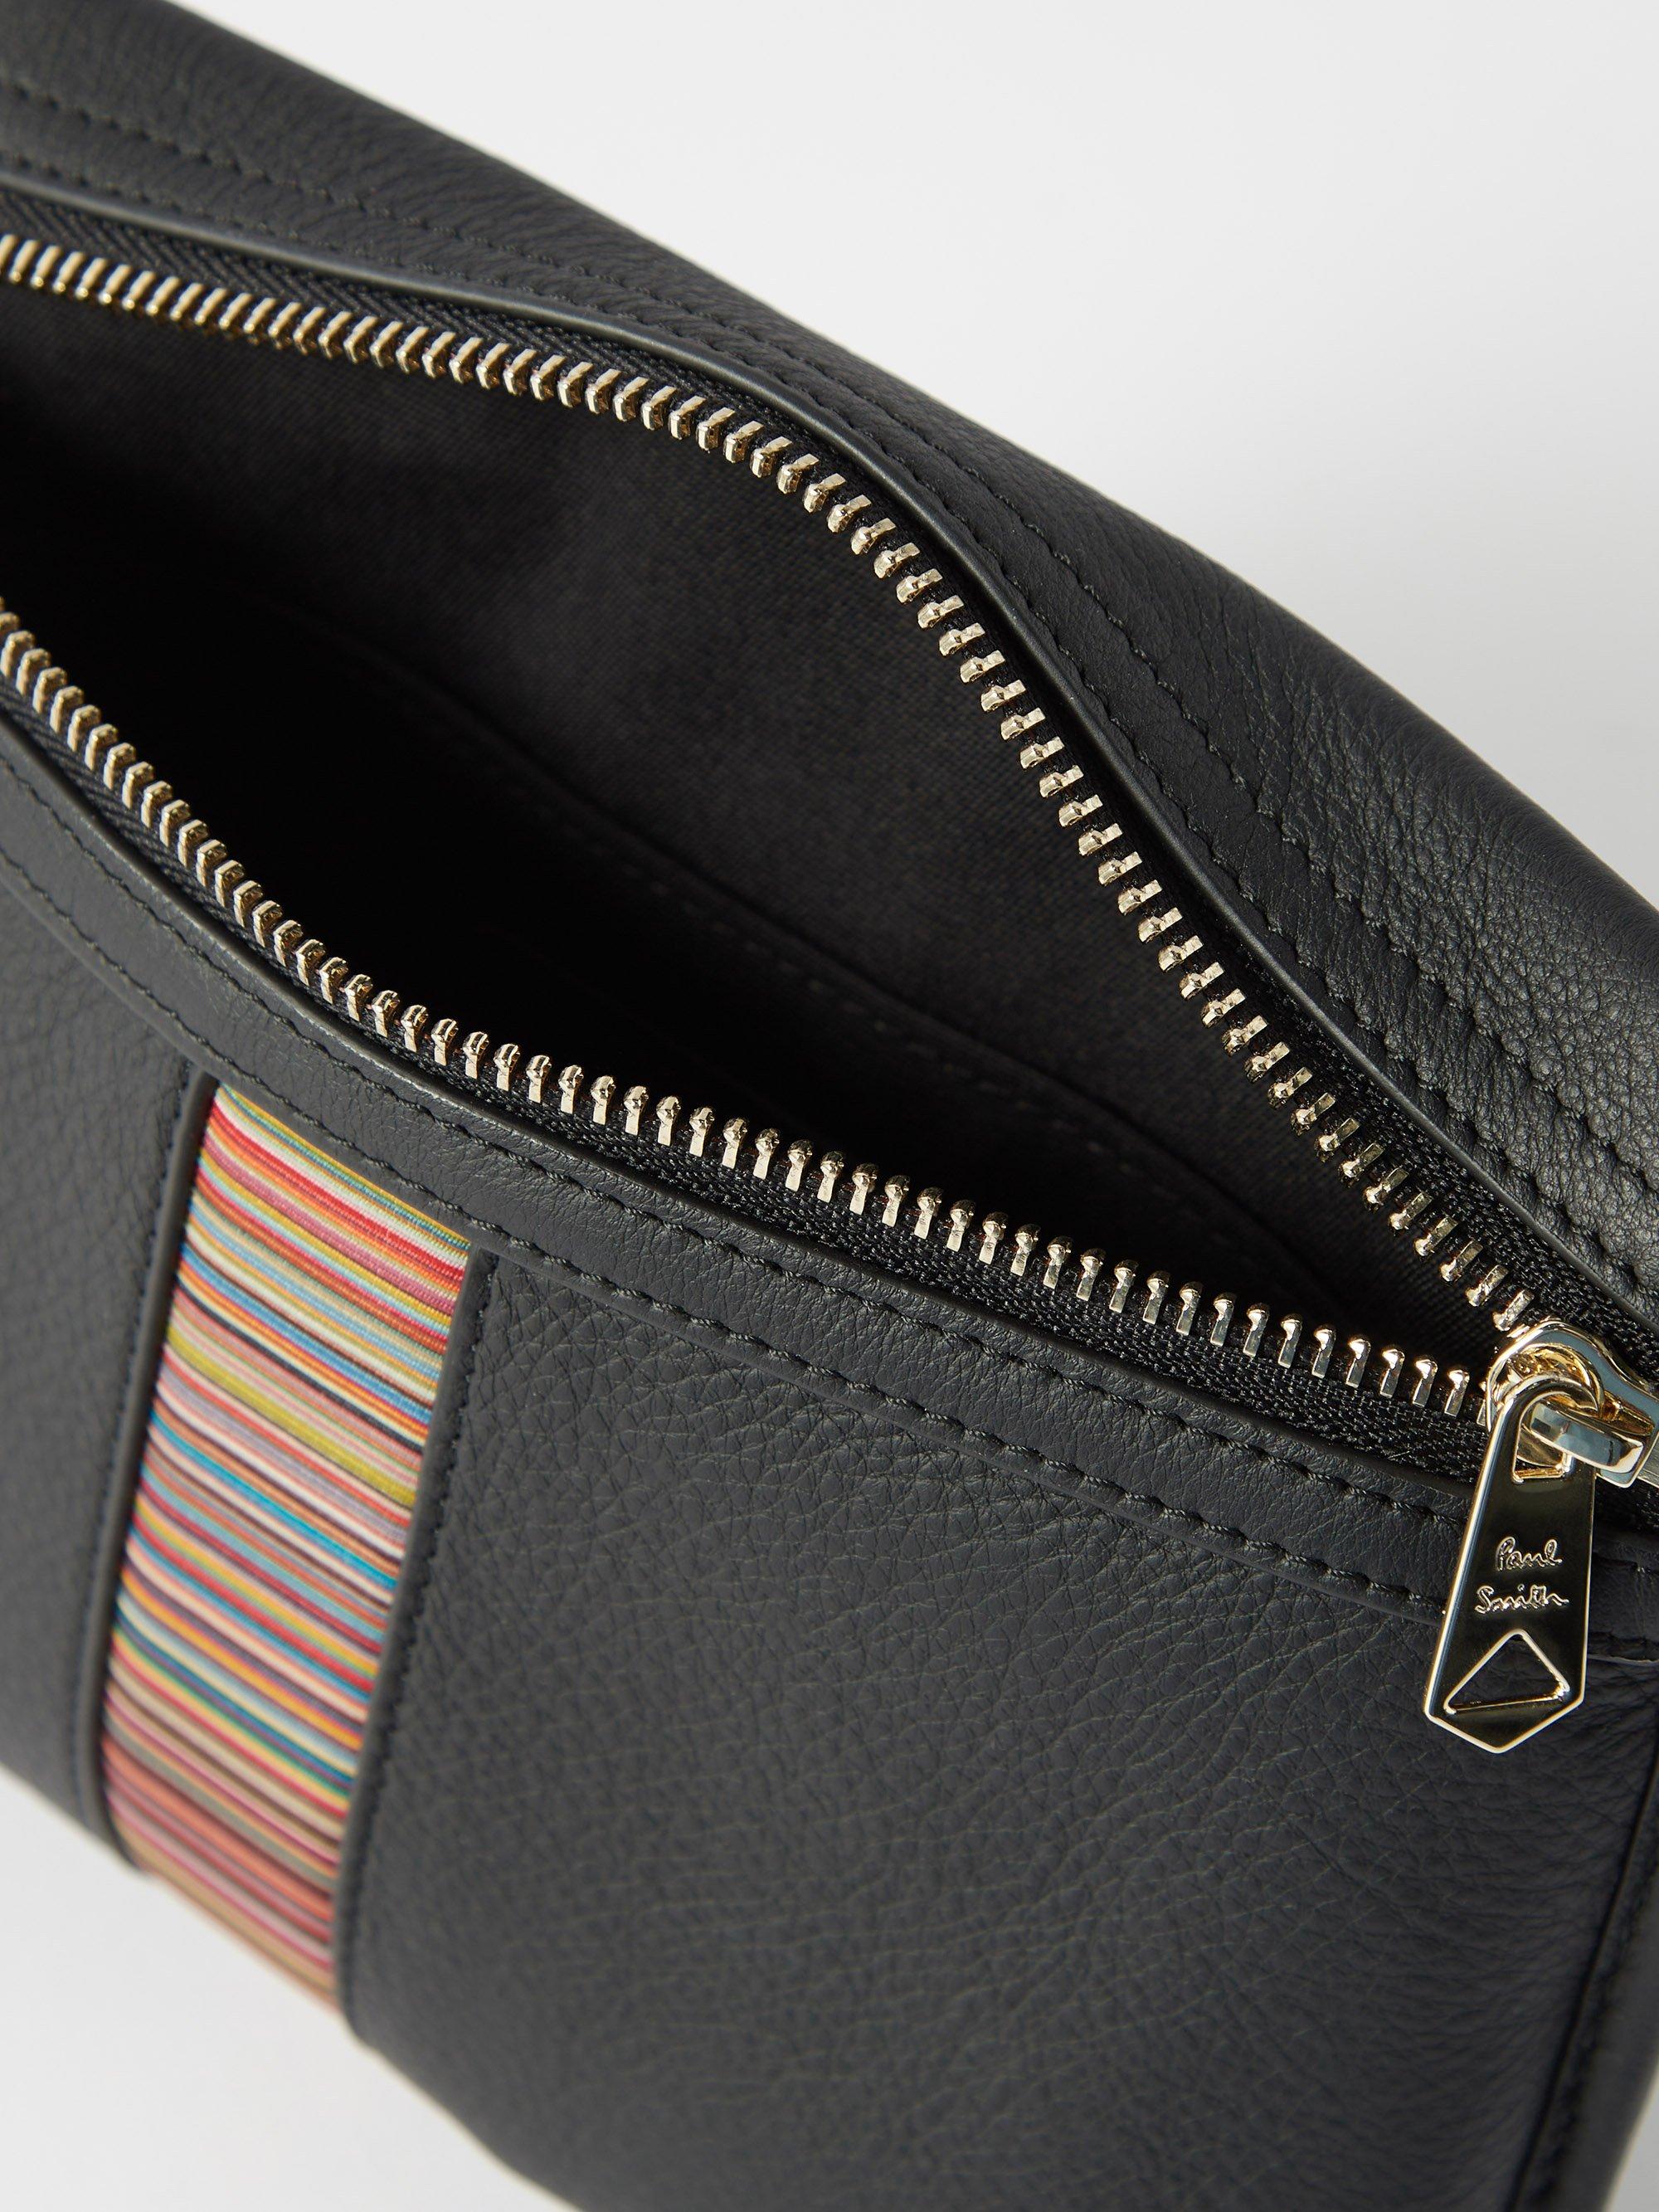 Paul Smith Leather 'Signature Stripe' Cross-Body Bag